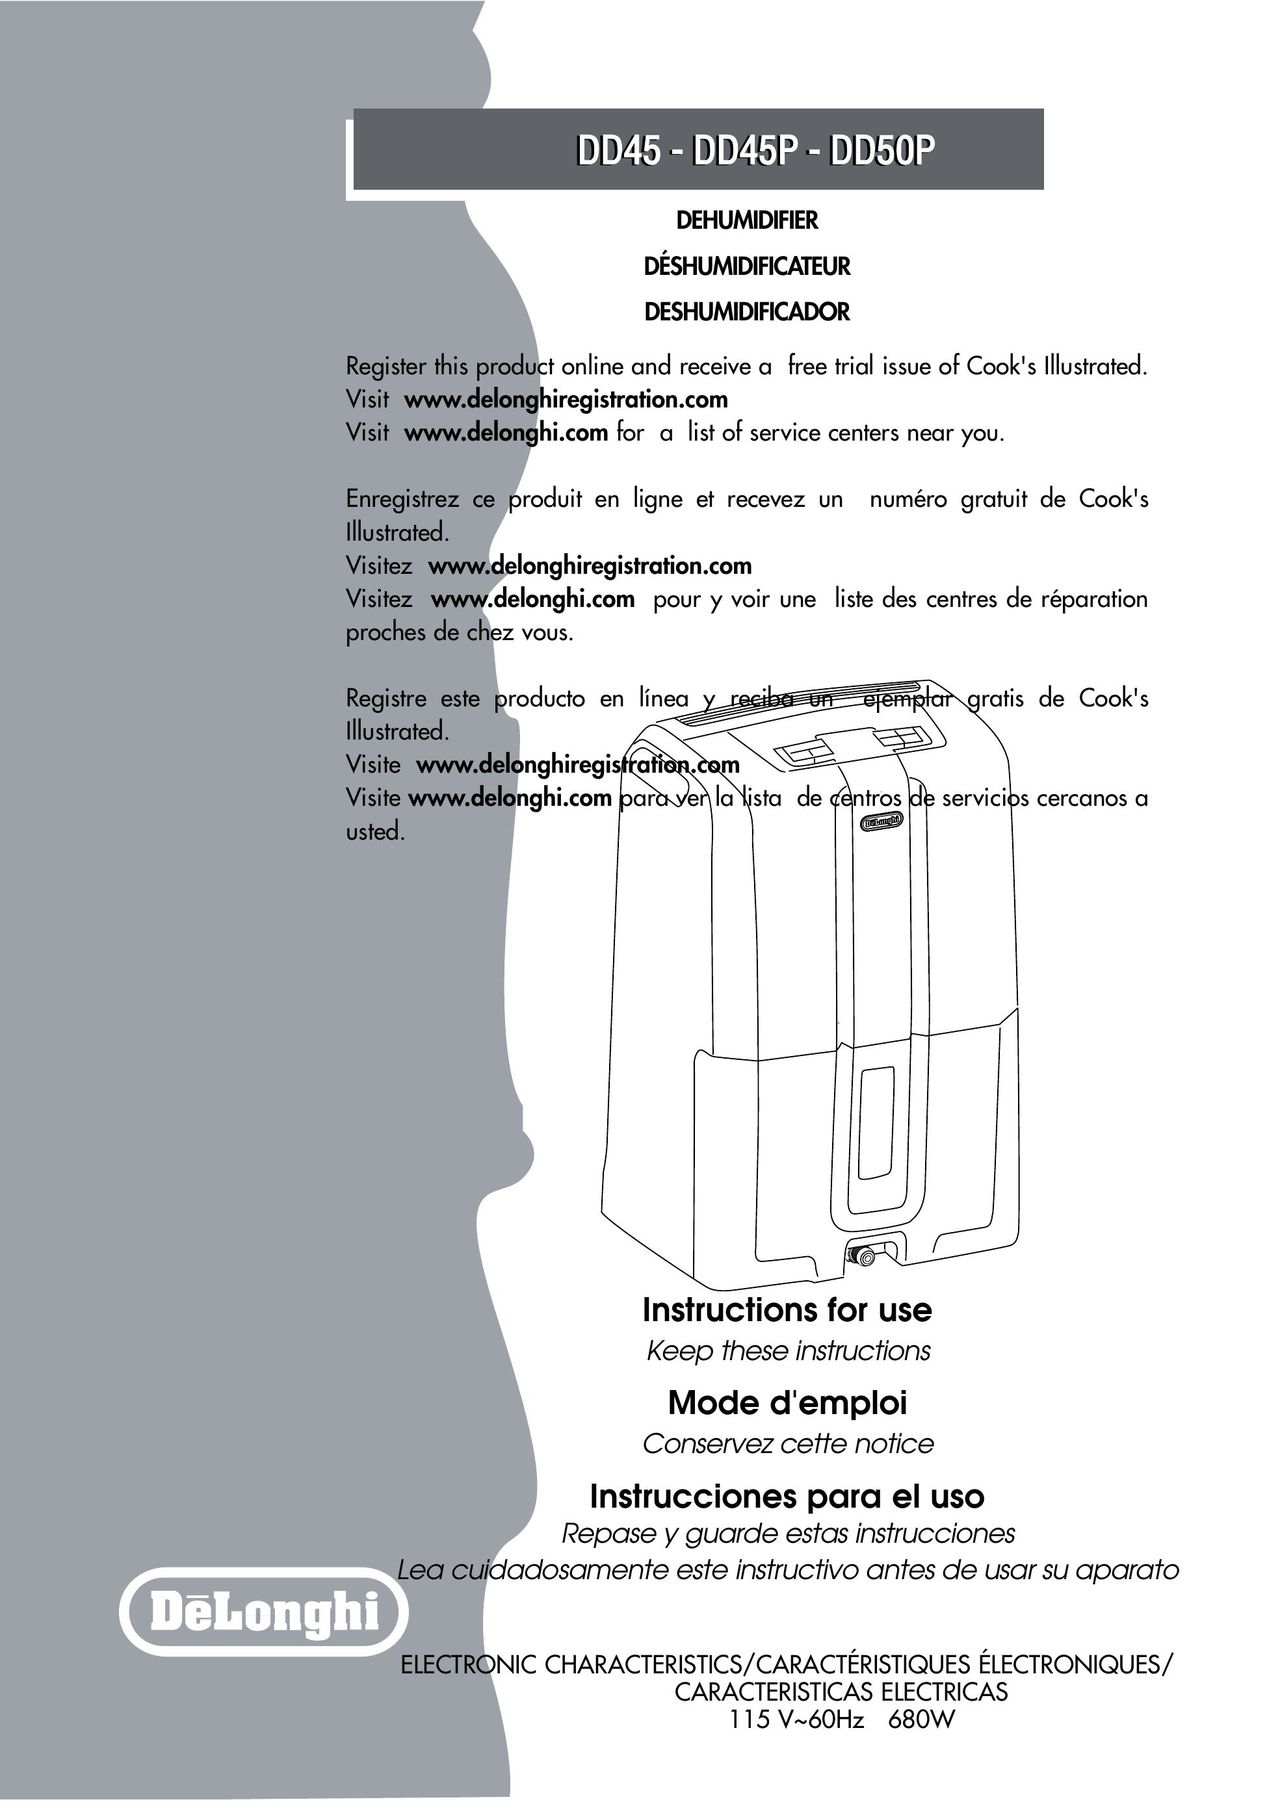 DeLonghi dd45 Dehumidifier User Manual